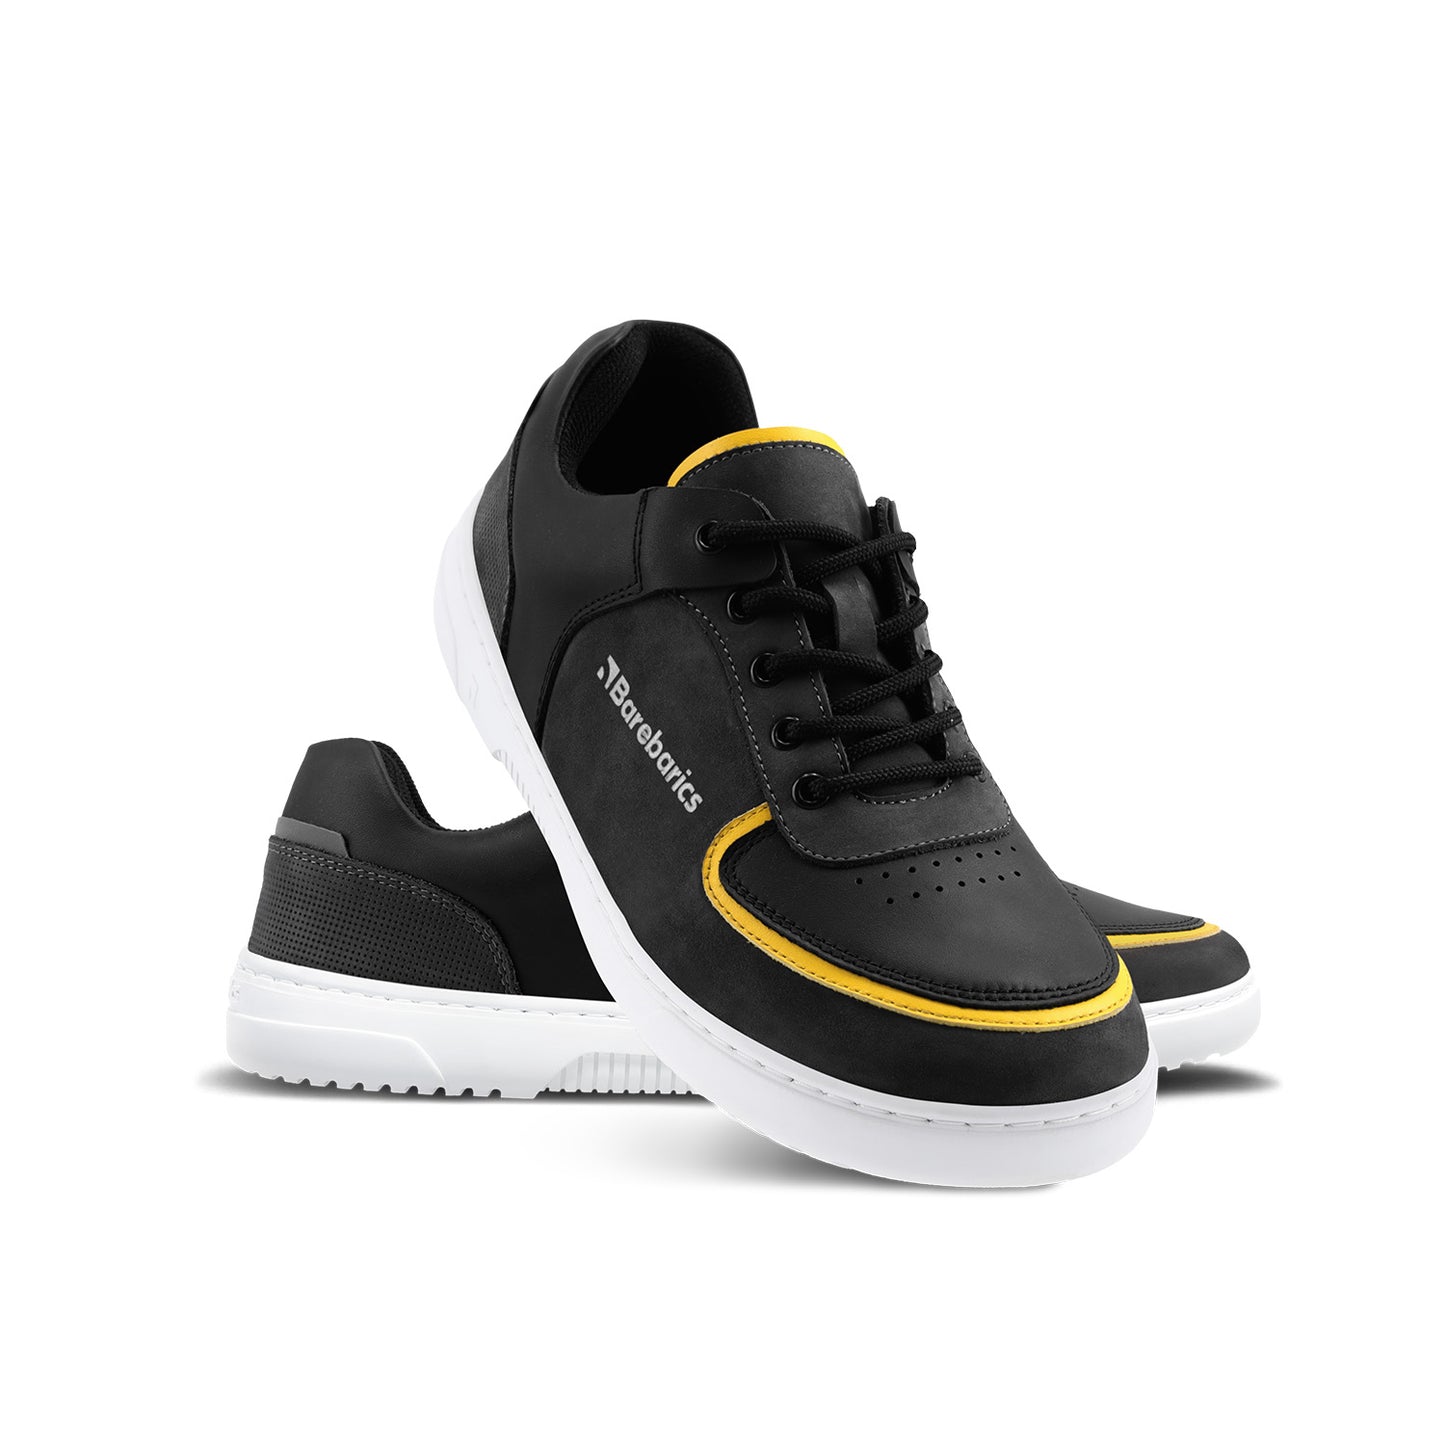 Barefoot Sneakers Barebarics Apollo - Dark Grey & Black